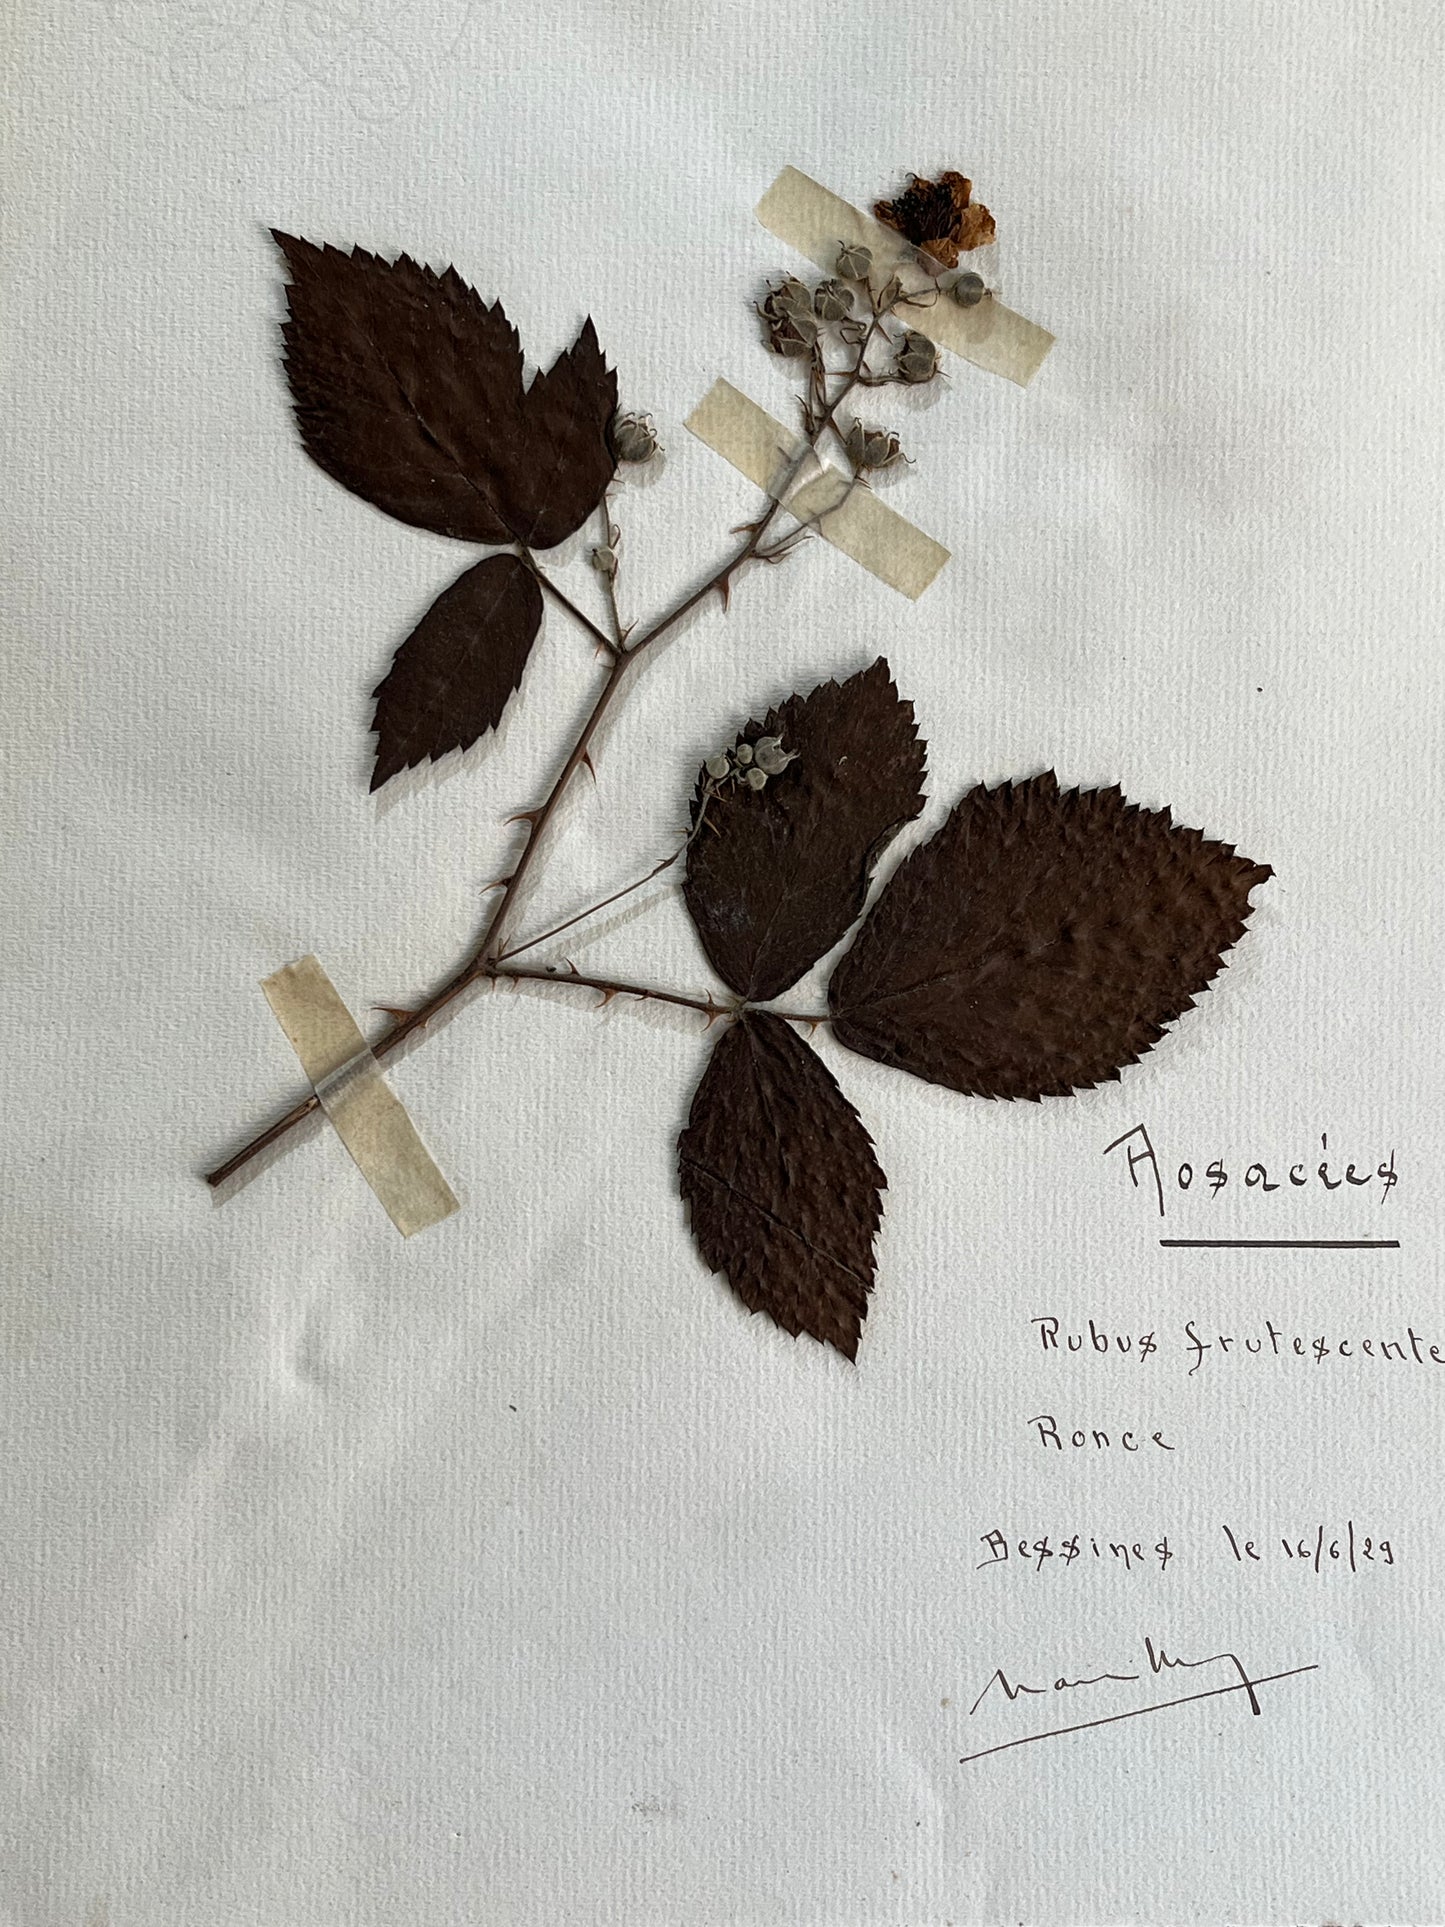 Set Botanical specimens